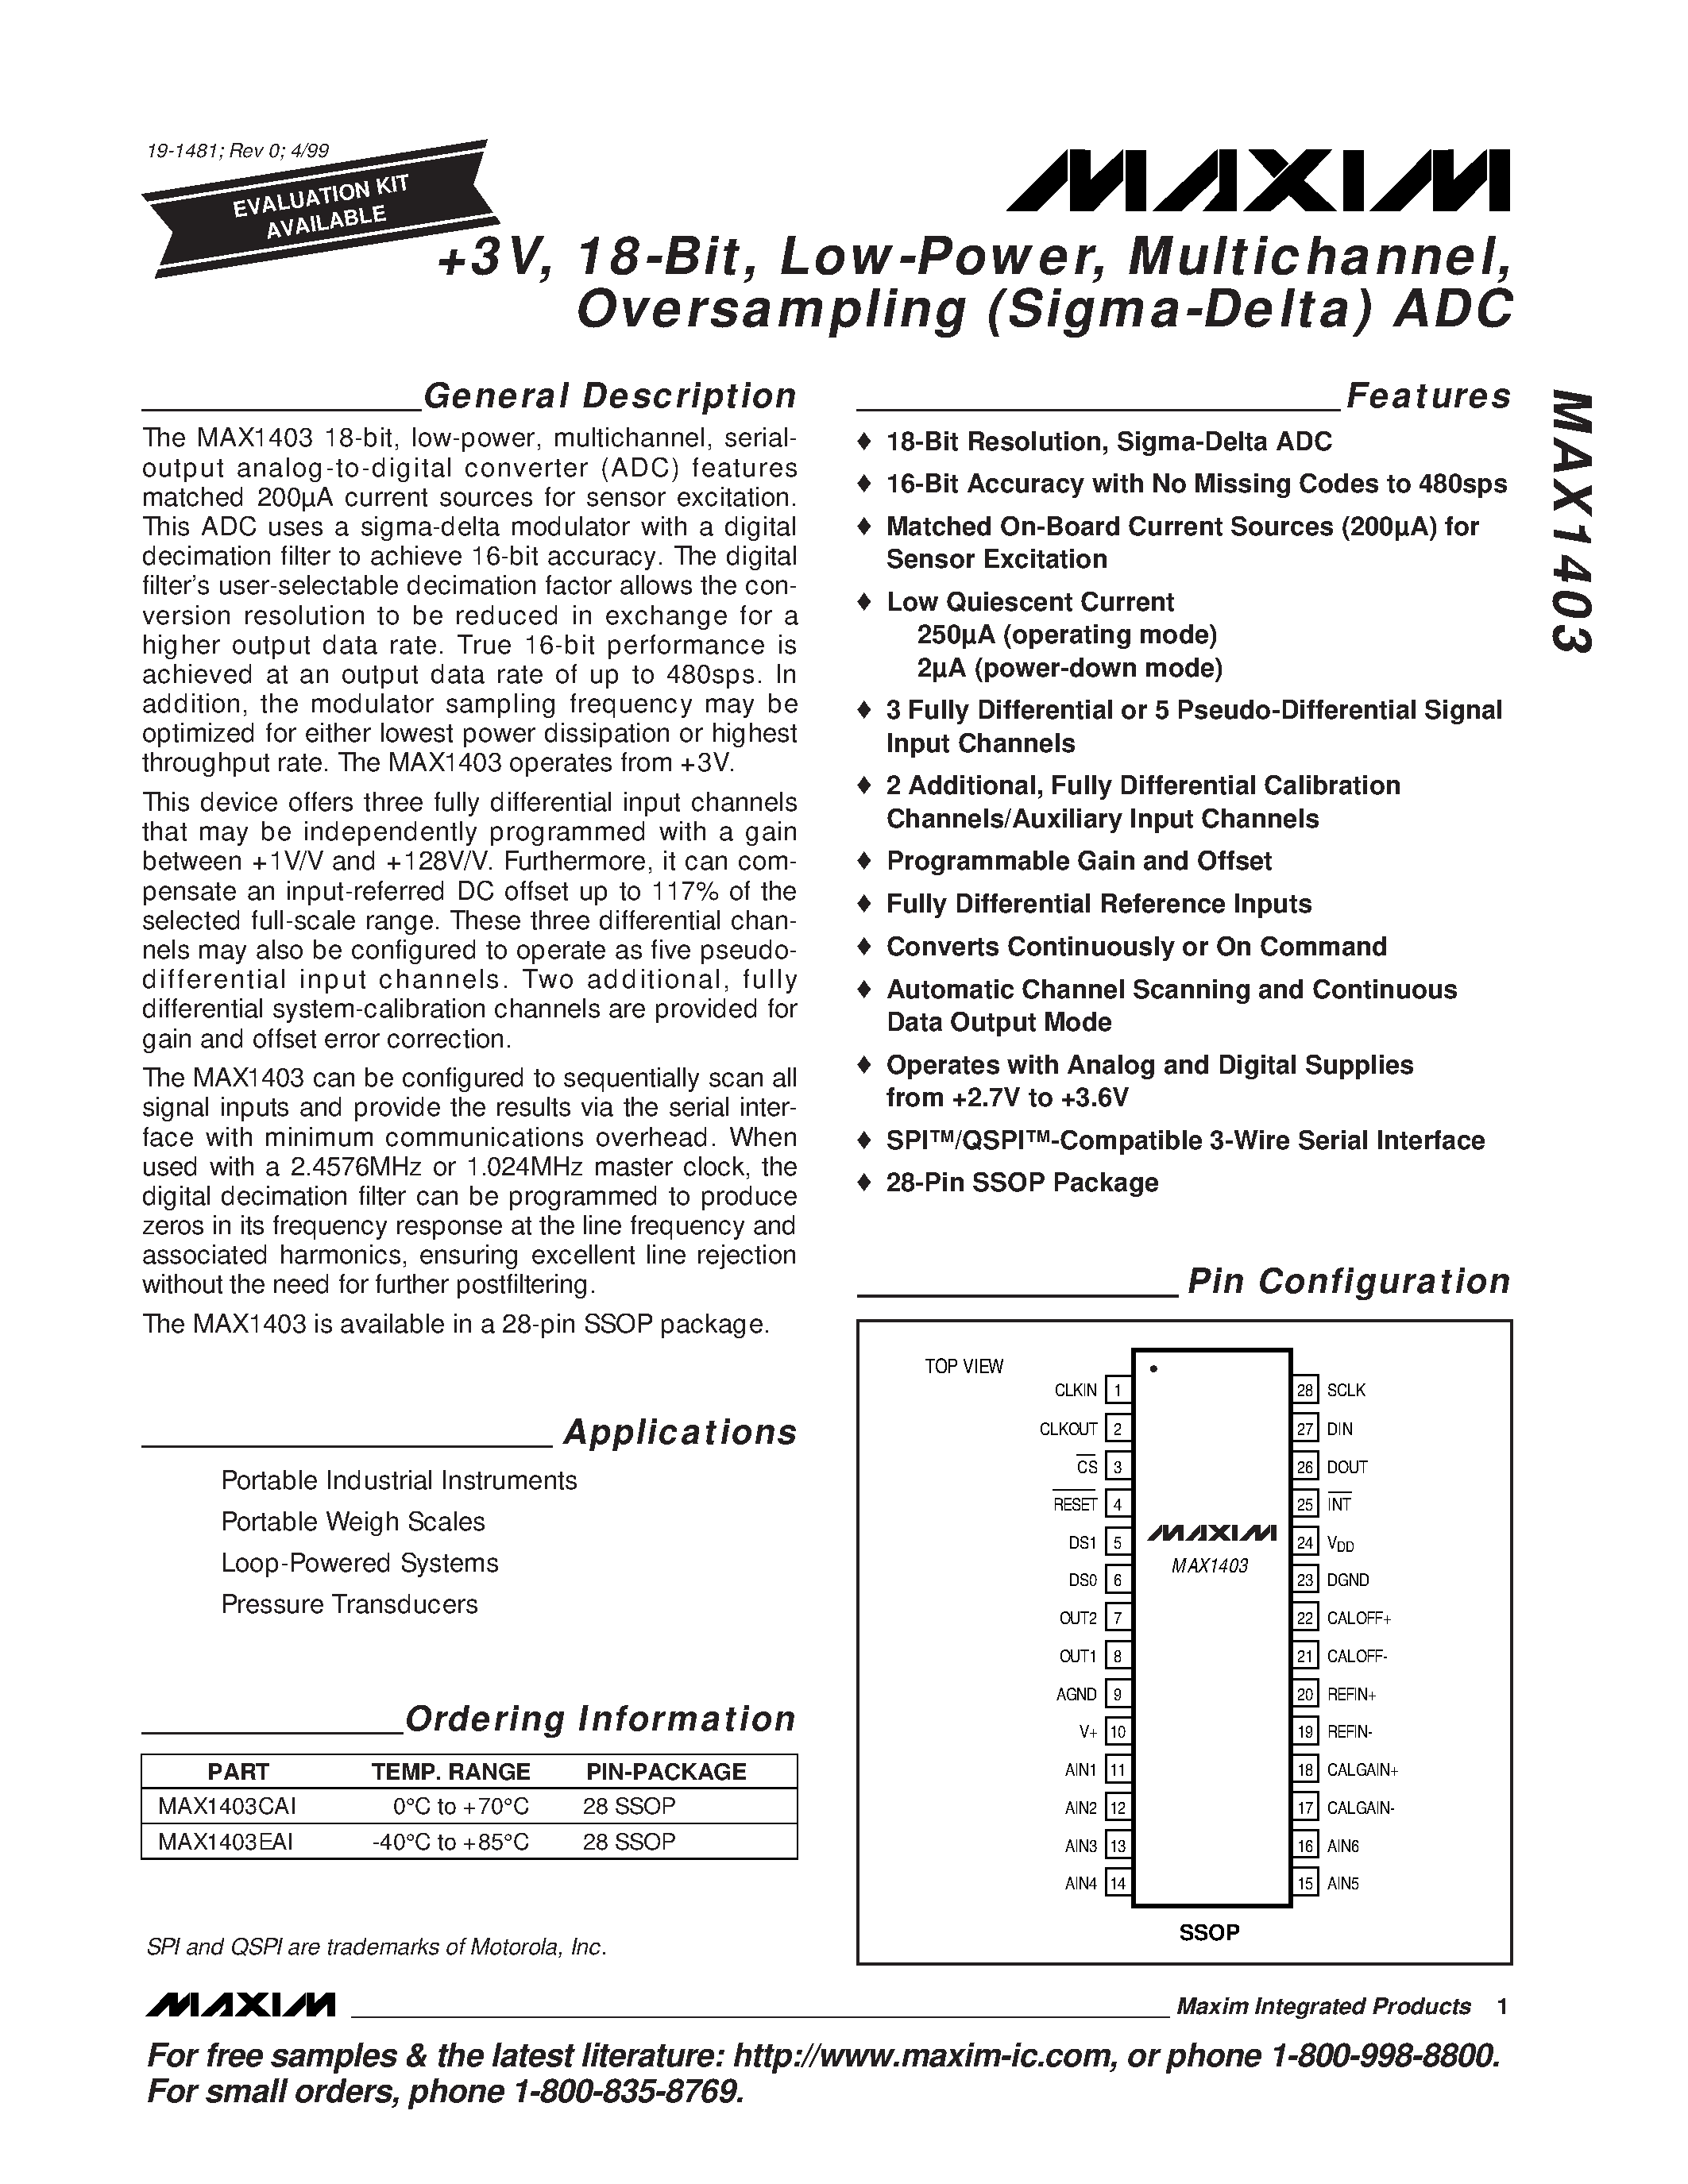 Даташит MAX1403EAI - +3V / 18-Bit / Low-Power / Multichannel / Oversampling Sigma-Delta ADC страница 1